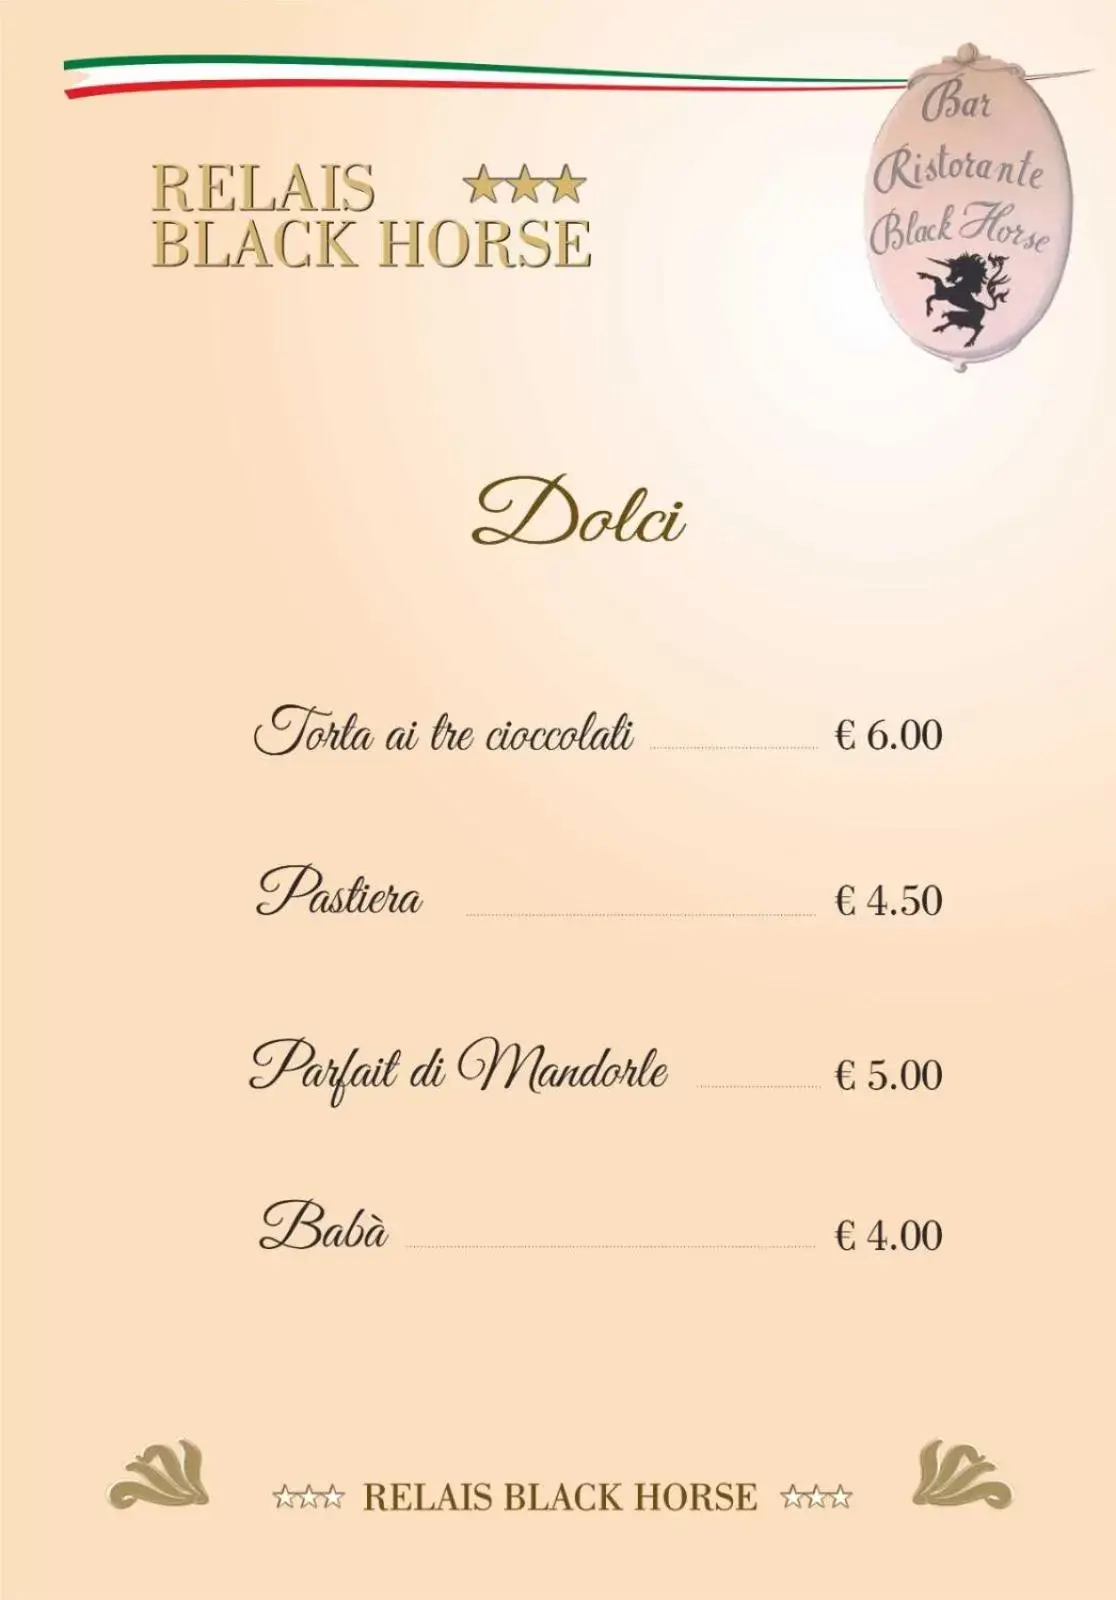 Relais Black Horse